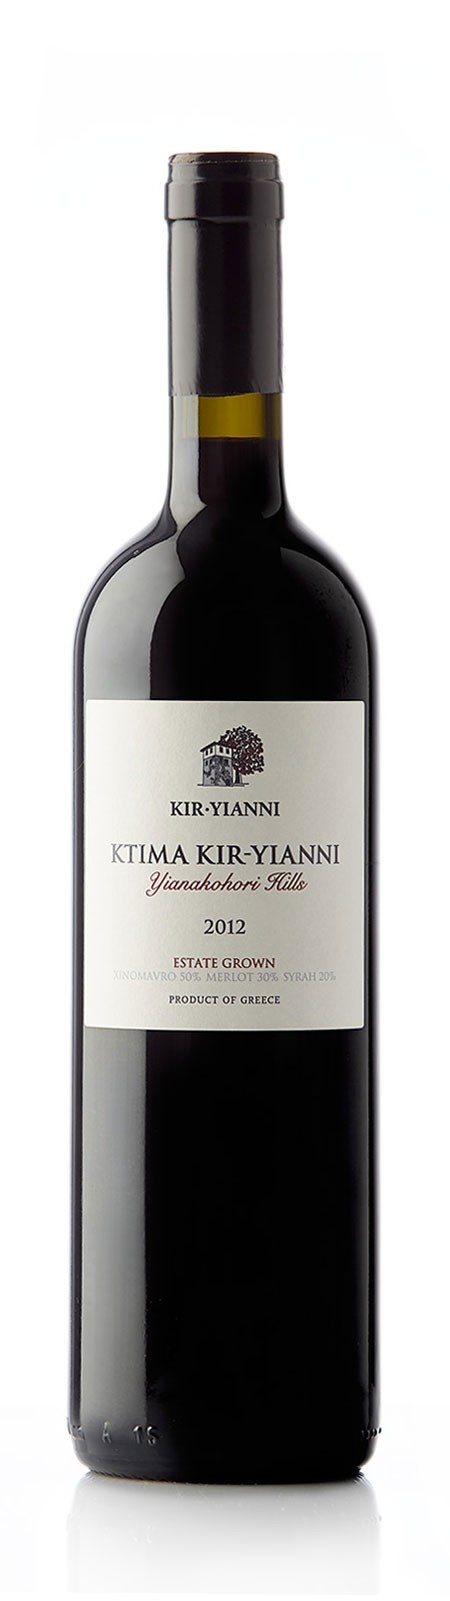 Kir Yianni Bottle